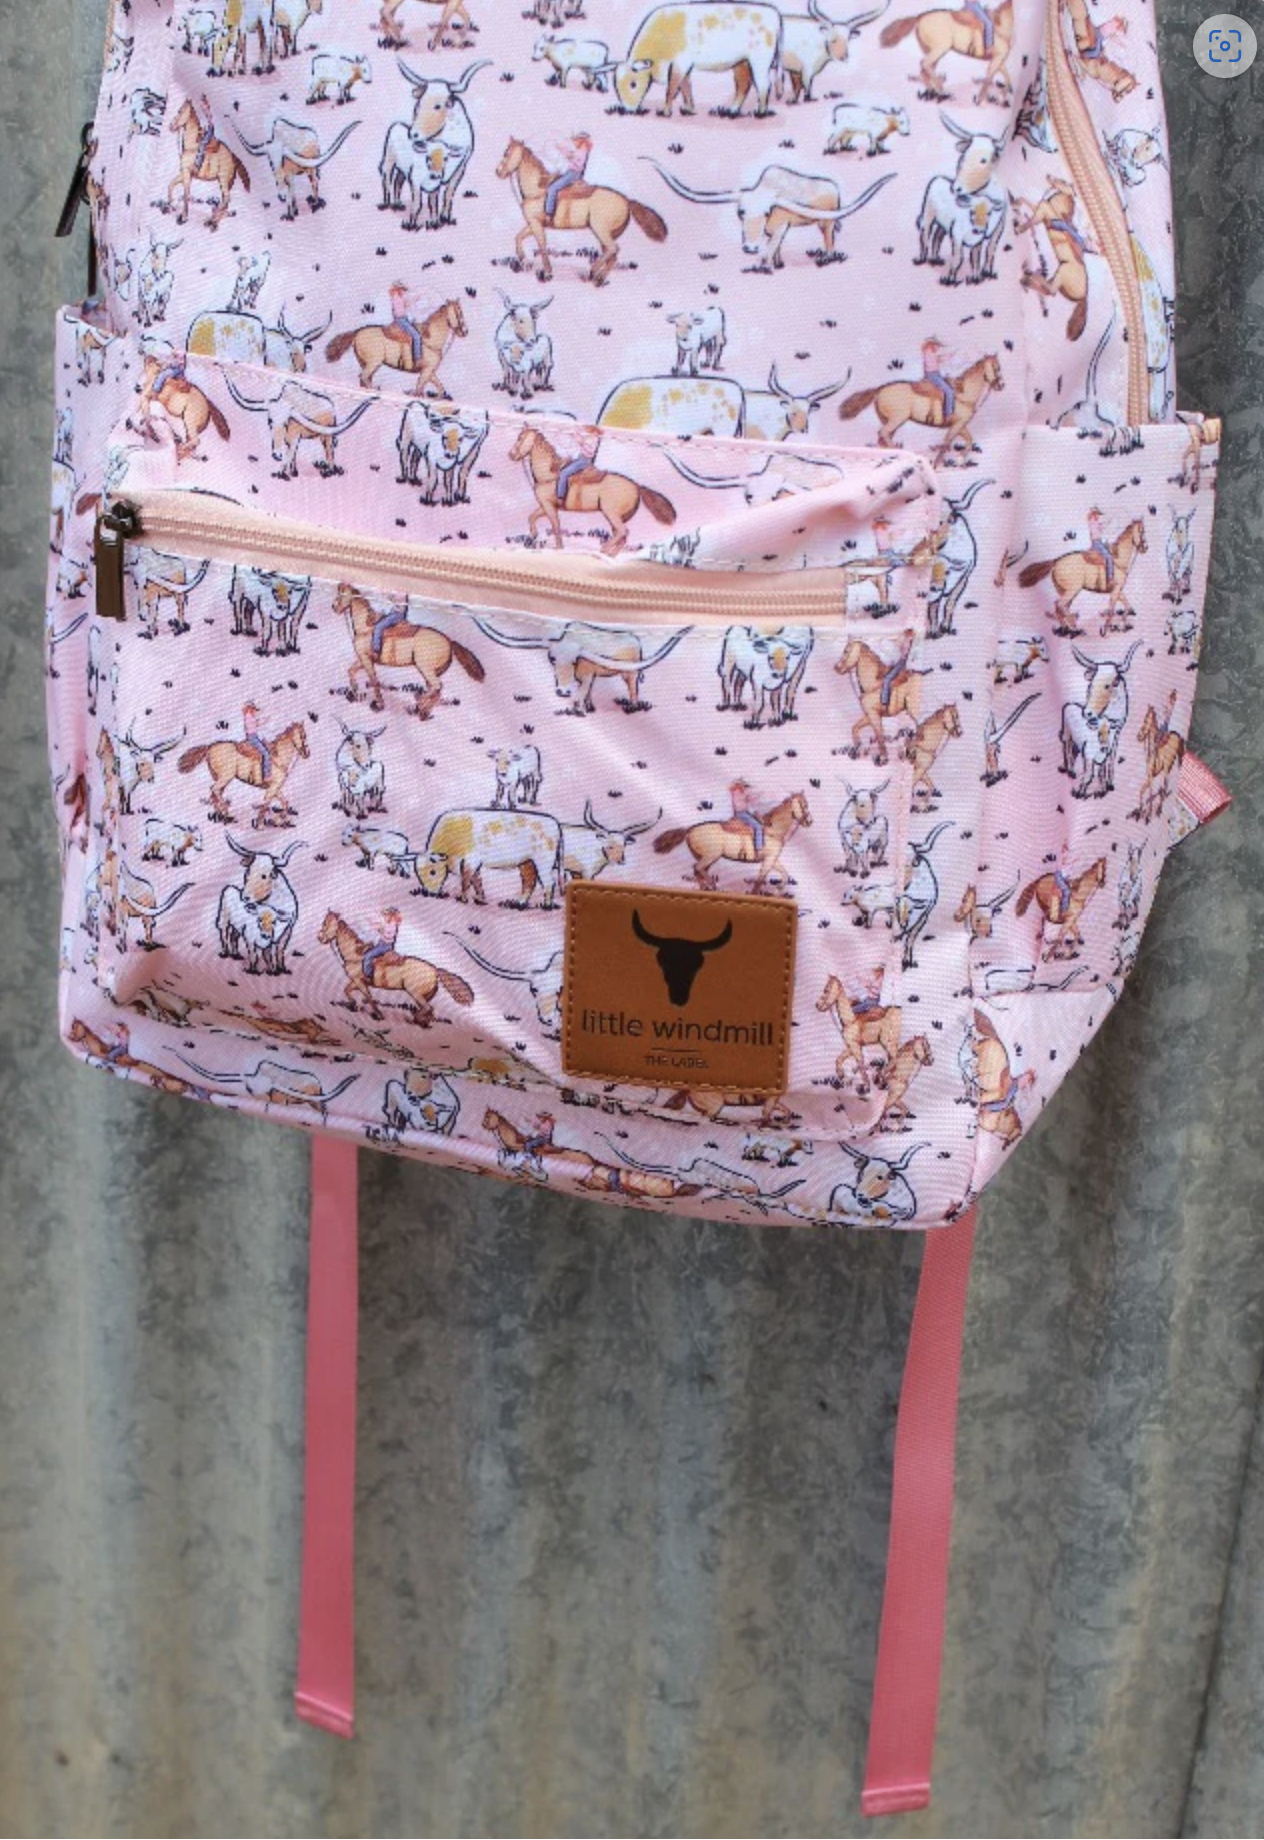 Backpack - Longhorn Pink Cowgirl